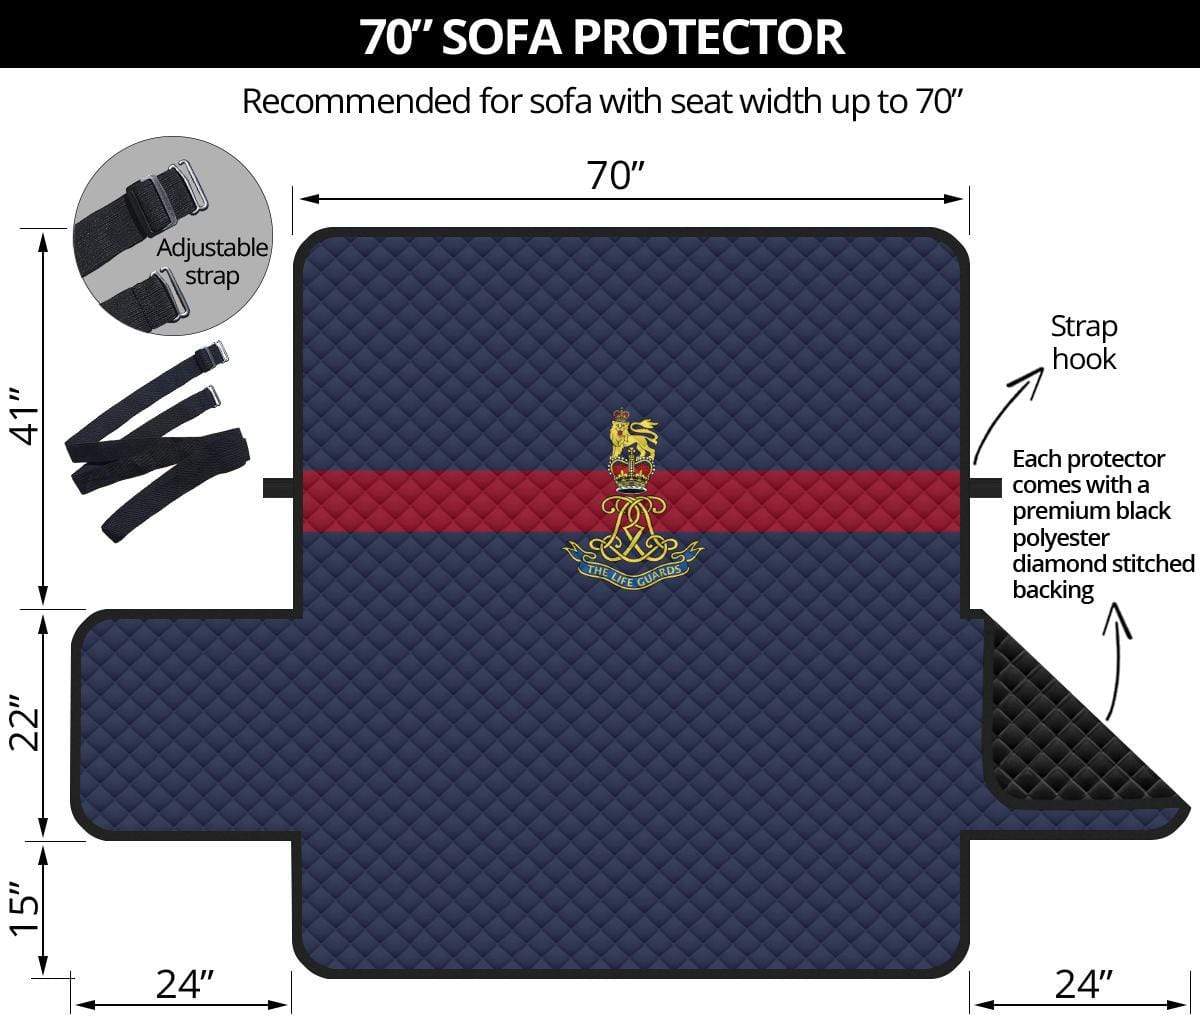 sofa protector 70" Life Guards 3-Seat Sofa Protector